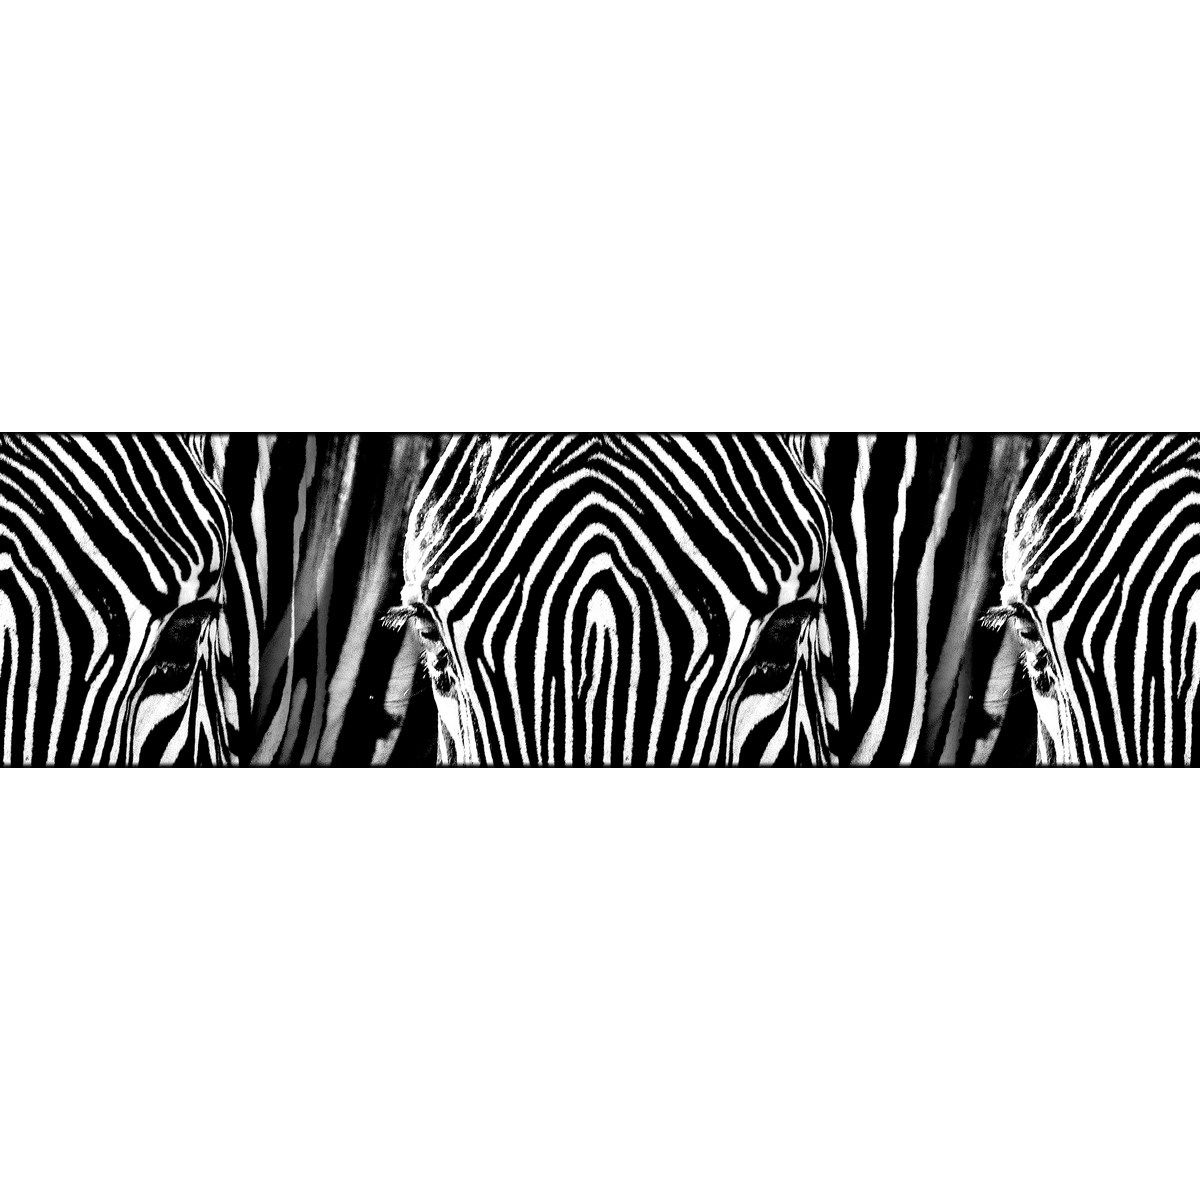 AG Art Samolepicí bordura Zebra, 500 x 14 cm  - GLIX DECO s.r.o.